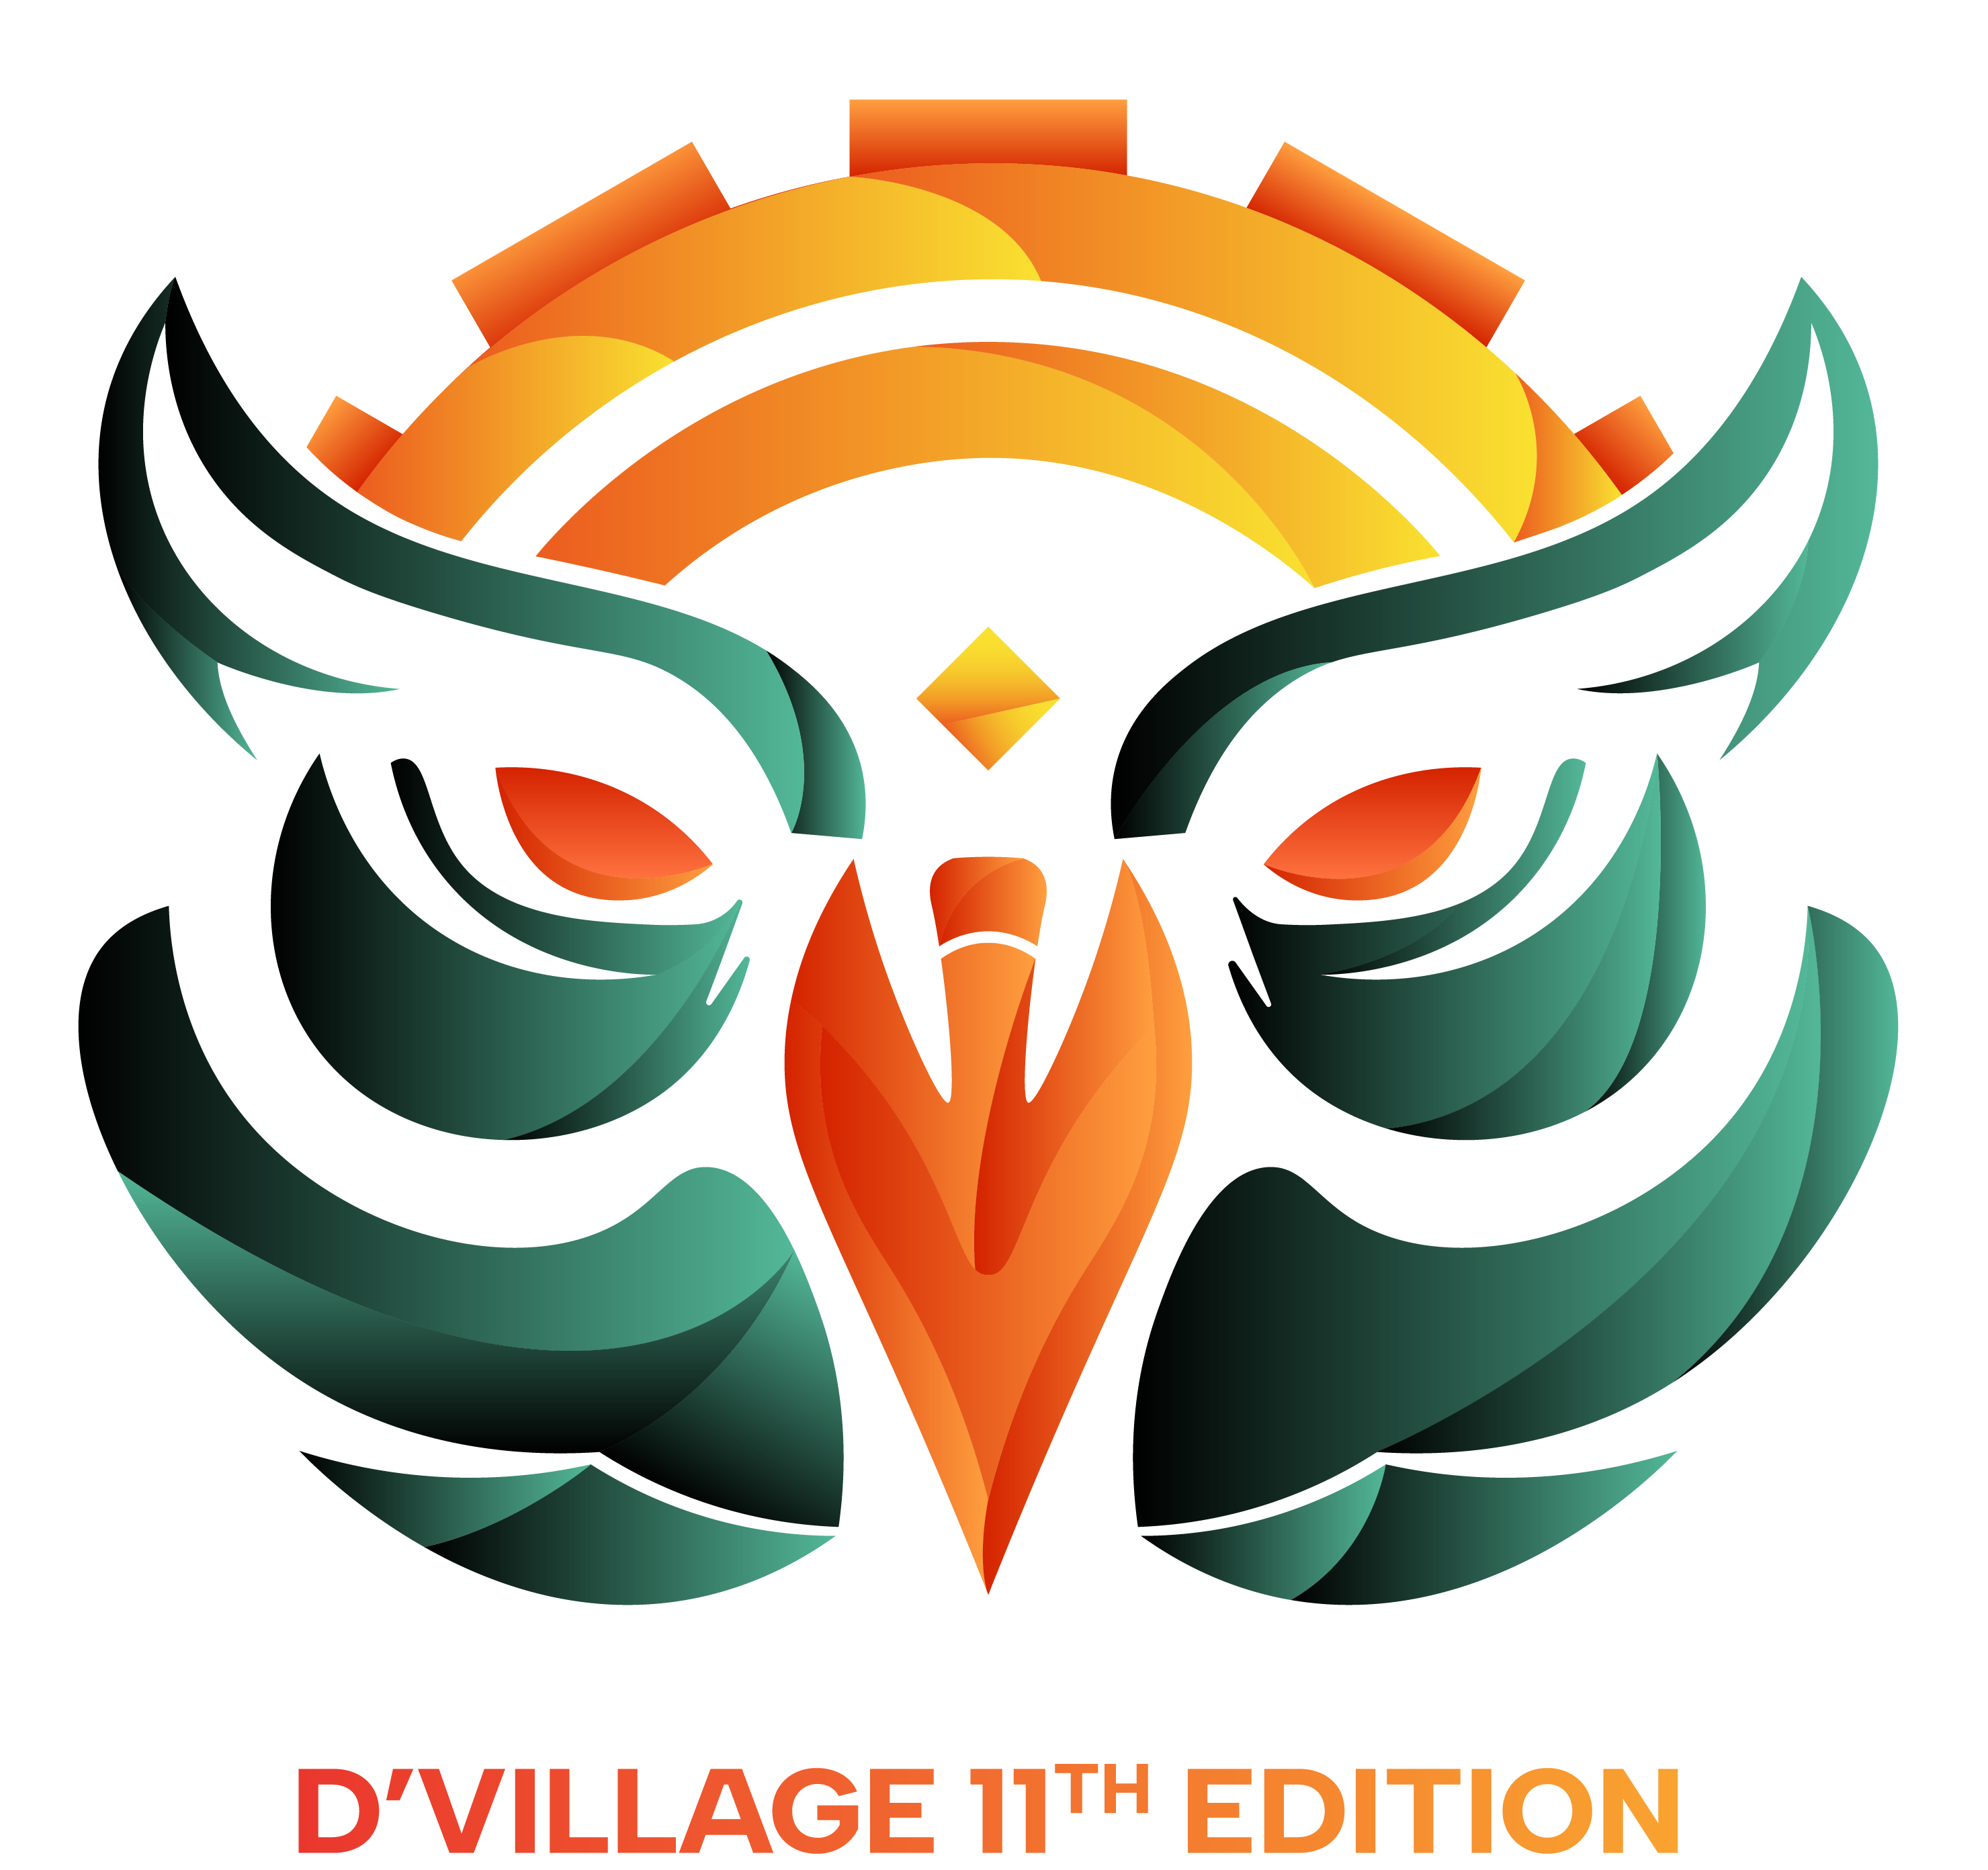 D'Village XIth Edition